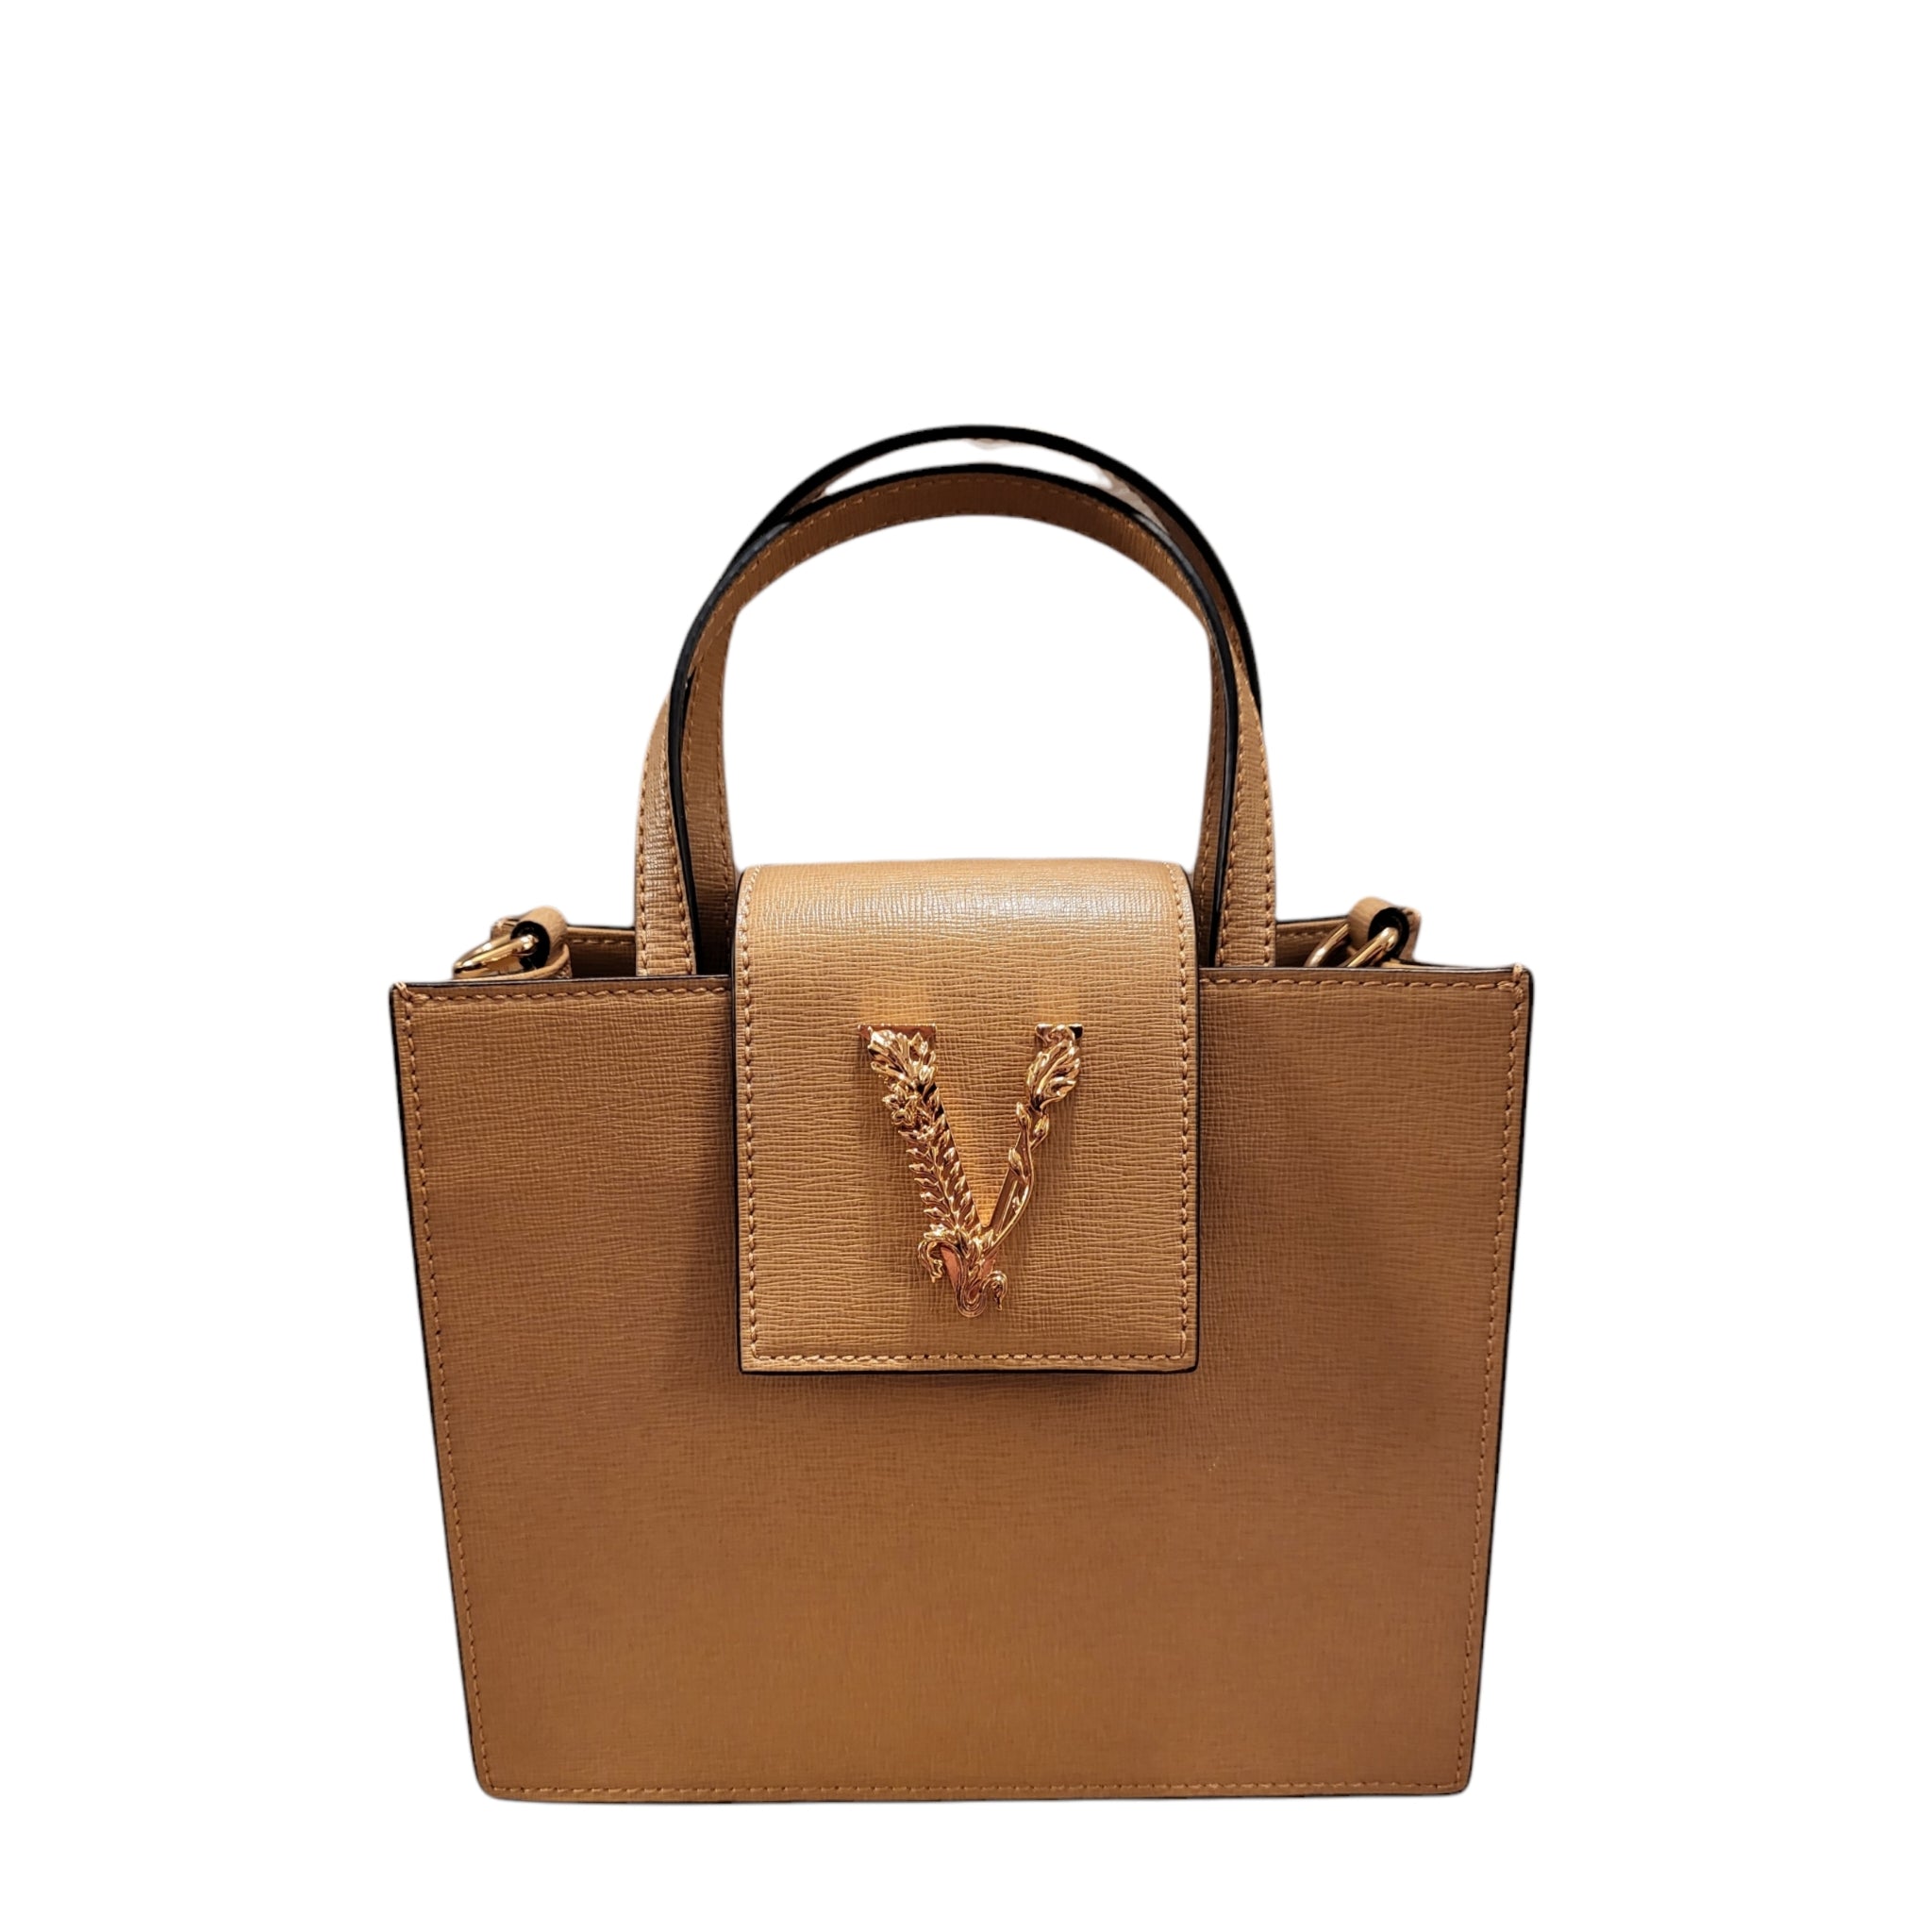 Versace Virtus micro bag - ShopStyle